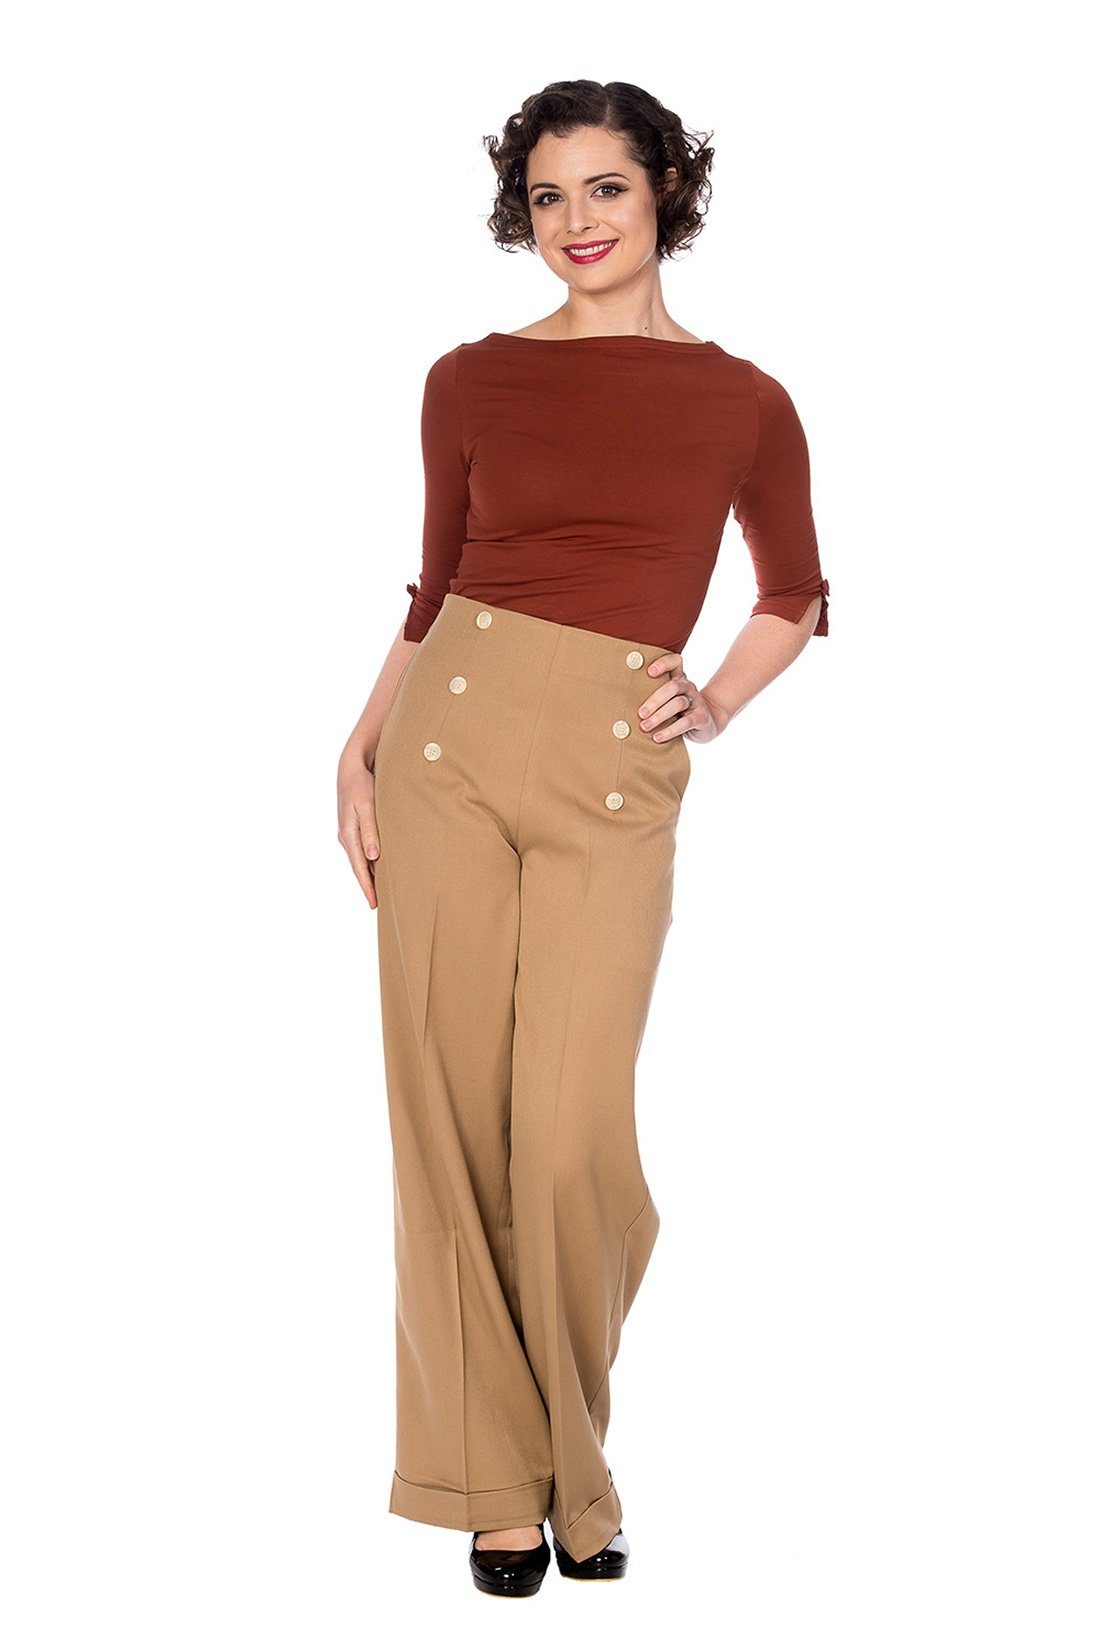 Banned Marlene-Hose Retro Adventures Ahead Tan Braun Vintage Trousers 40er Jahre Stil